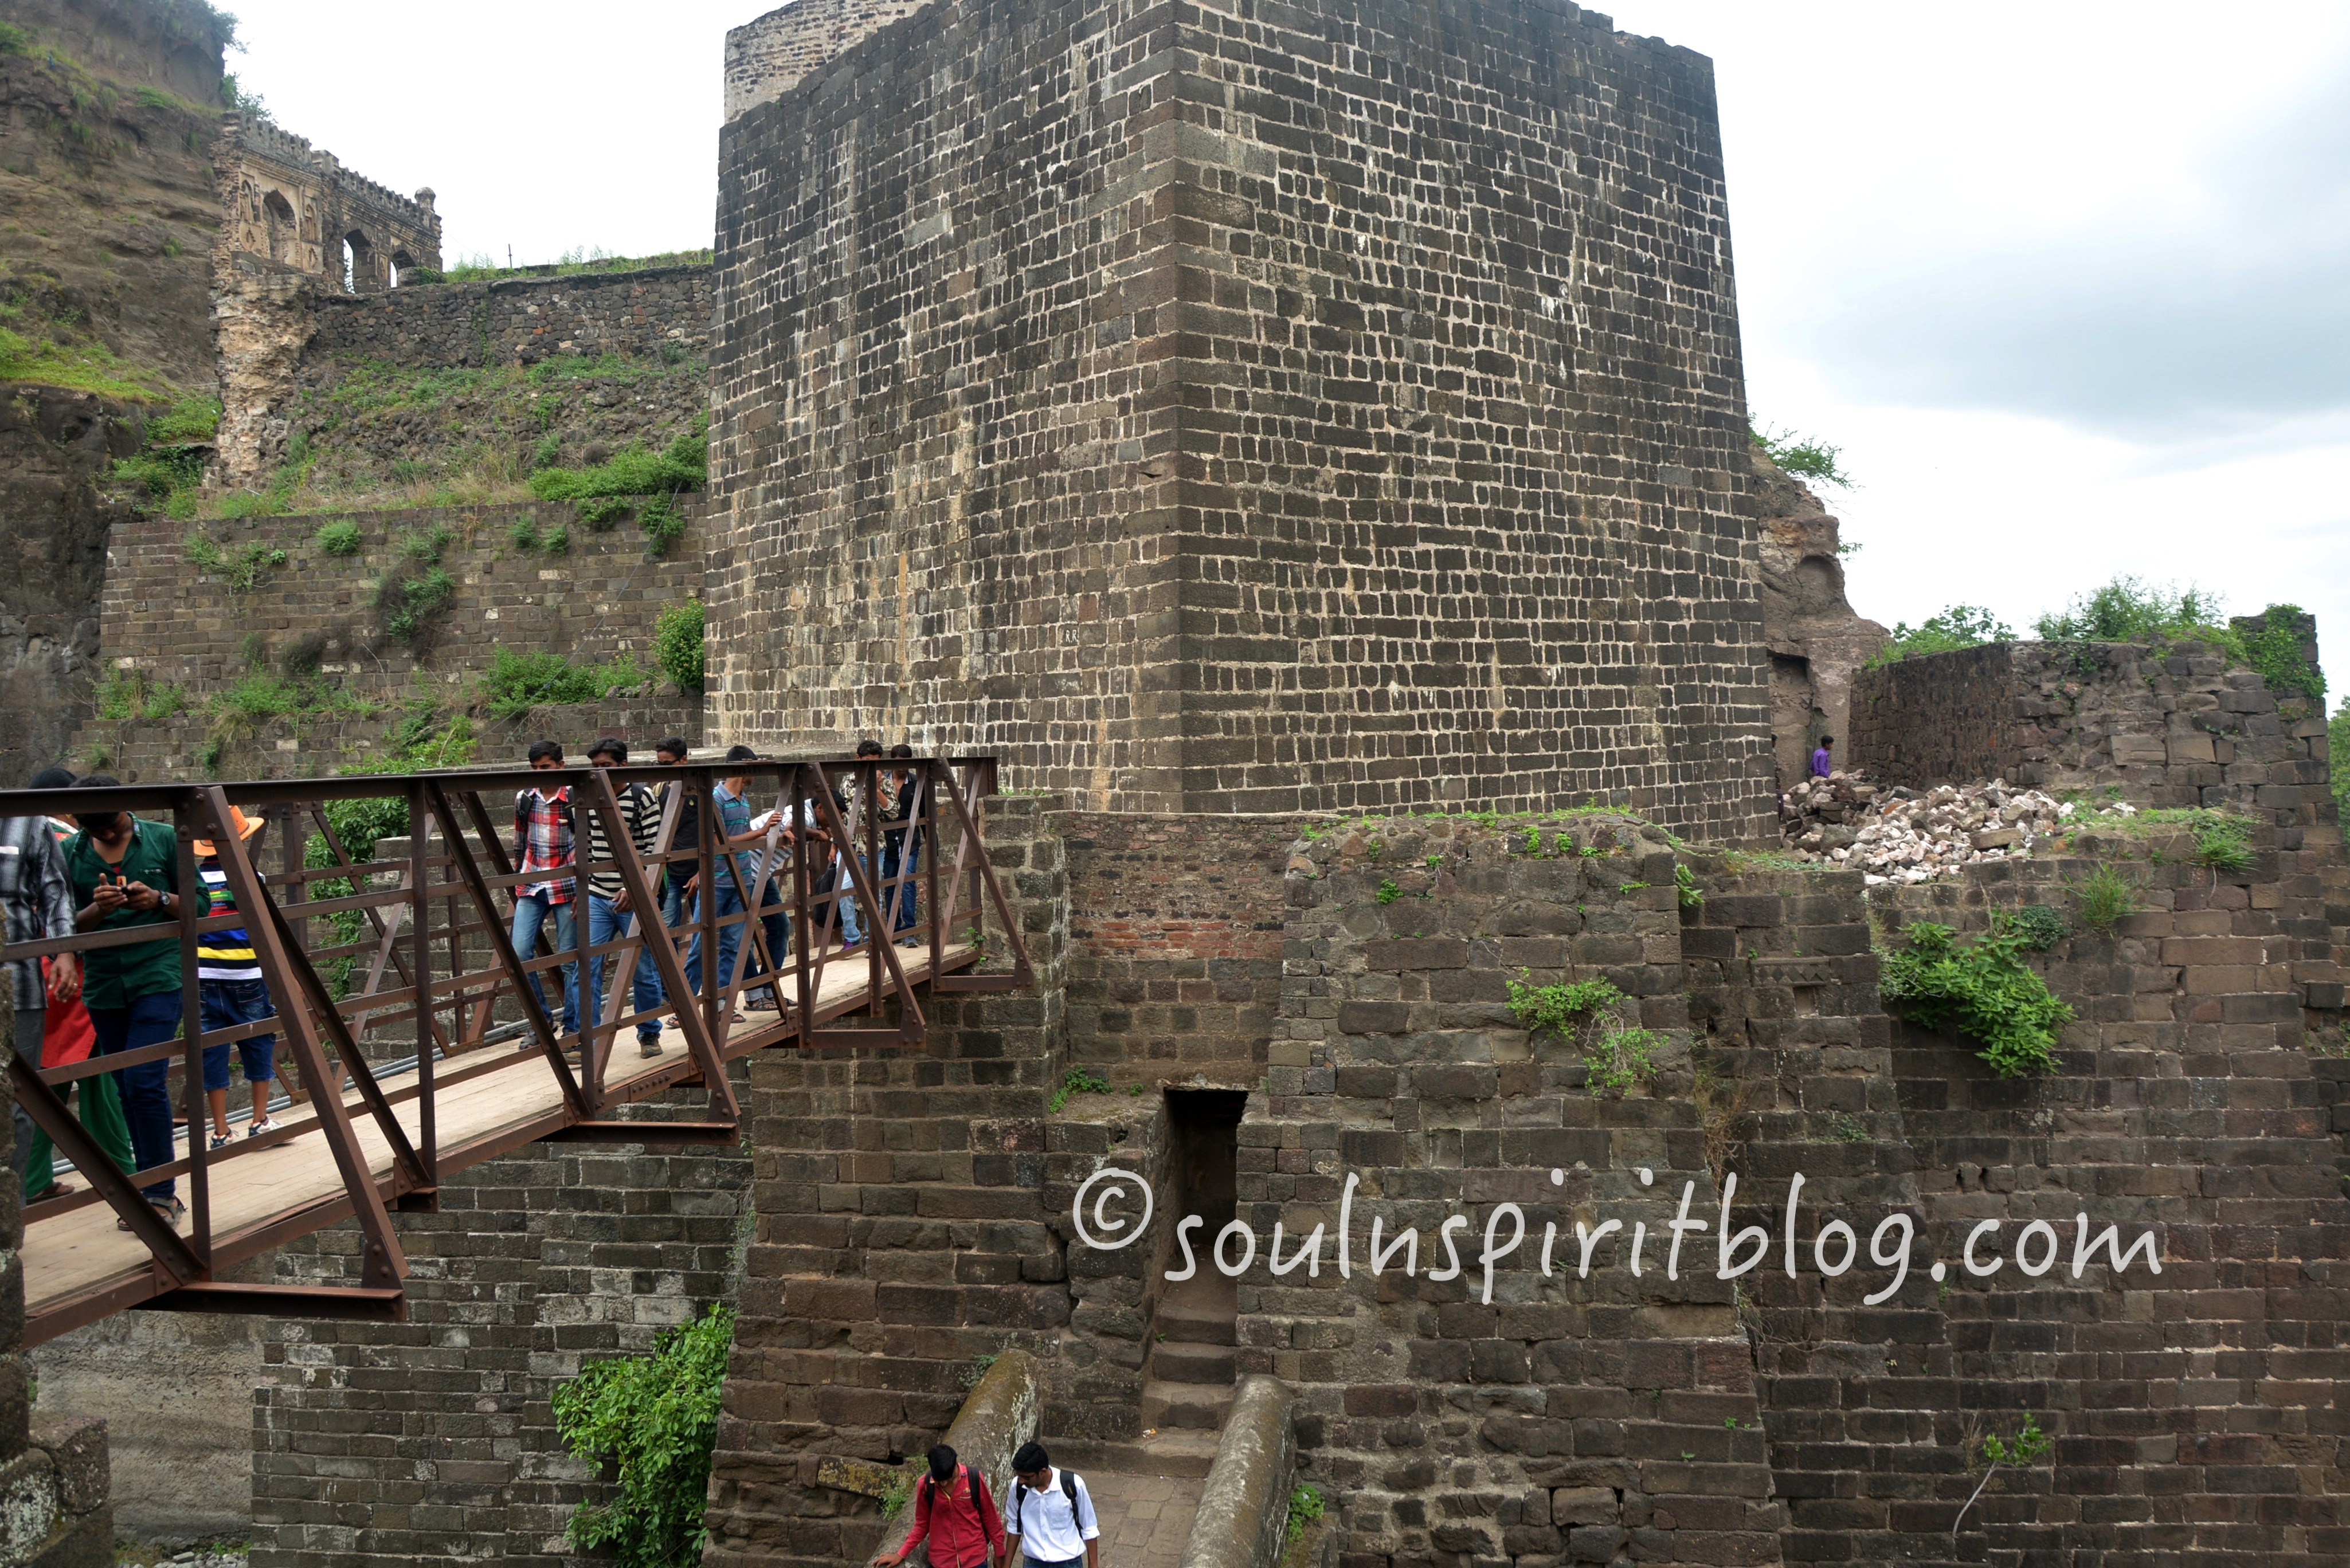 The narrow bridge to reach the main fort